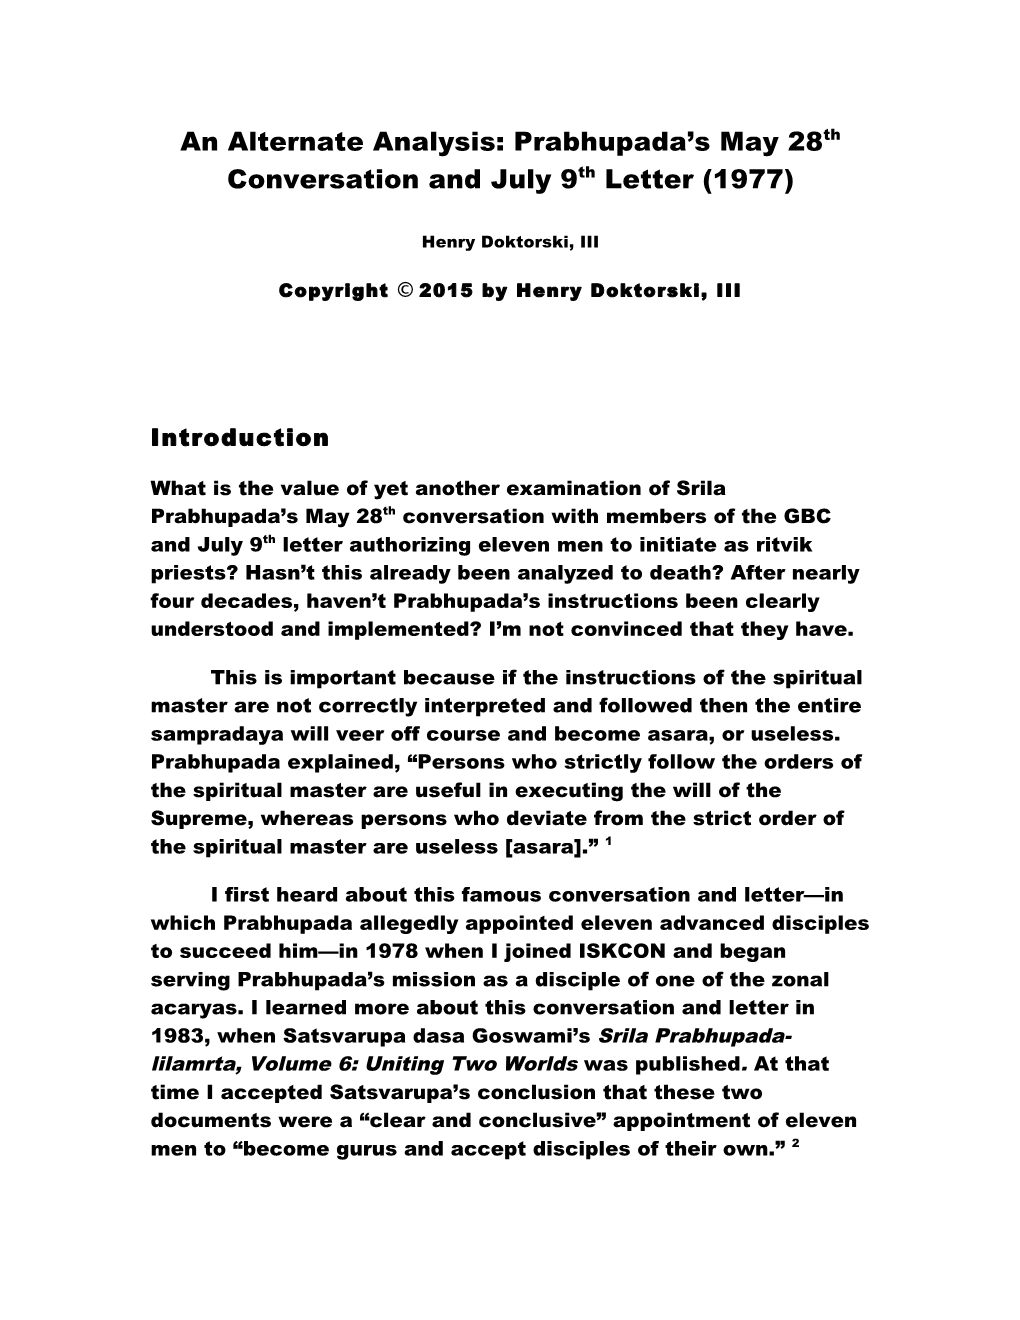 An Alternate Analysis: Prabhupada's May 28Th Conversation and July 9Th